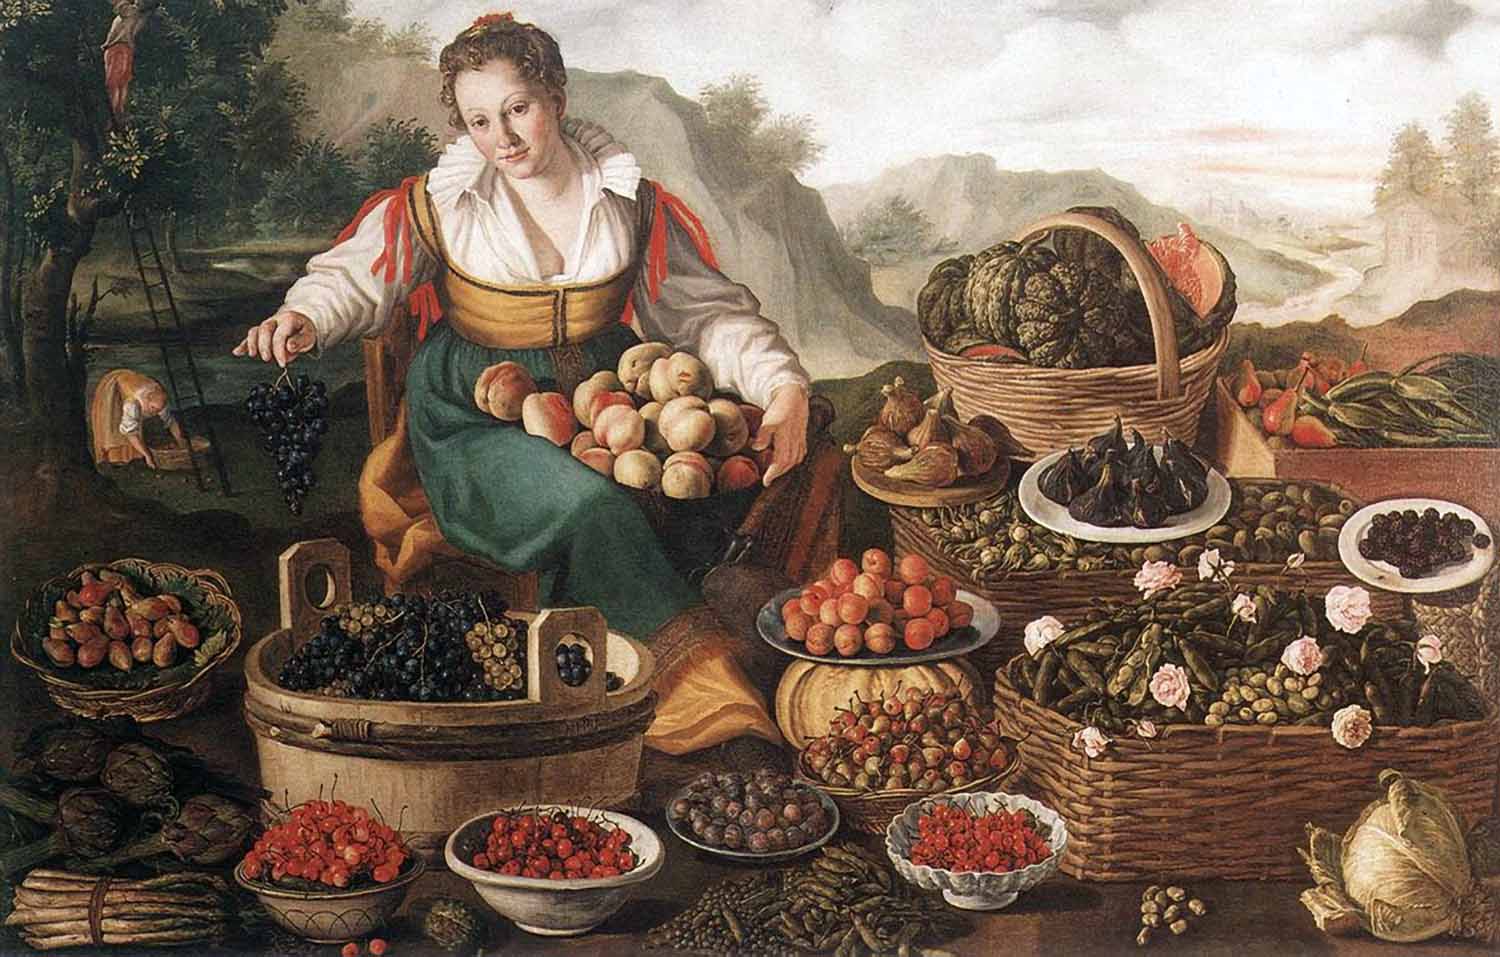 Художник Винченцо Кампи Vincenzo Campi картина торговка фруктами краски природы Альберт Сафиуллин